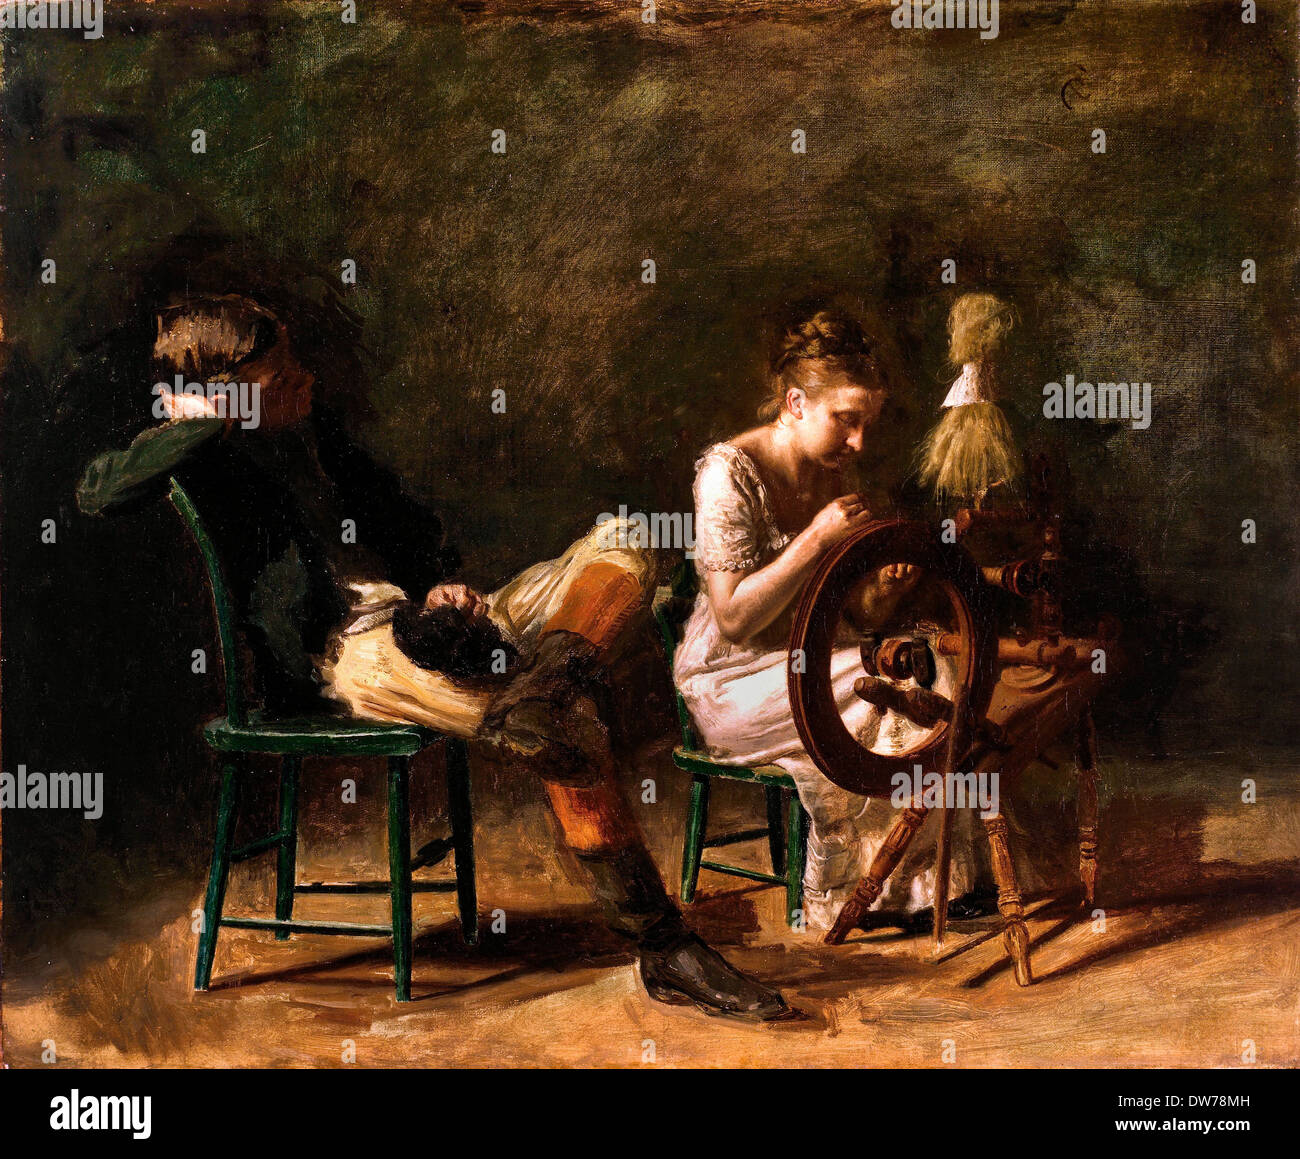 Thomas Eakins, The Courtship. Circa 1878. Oil on canvas. Fine Arts Museums of San Francisco, USA. Stock Photo